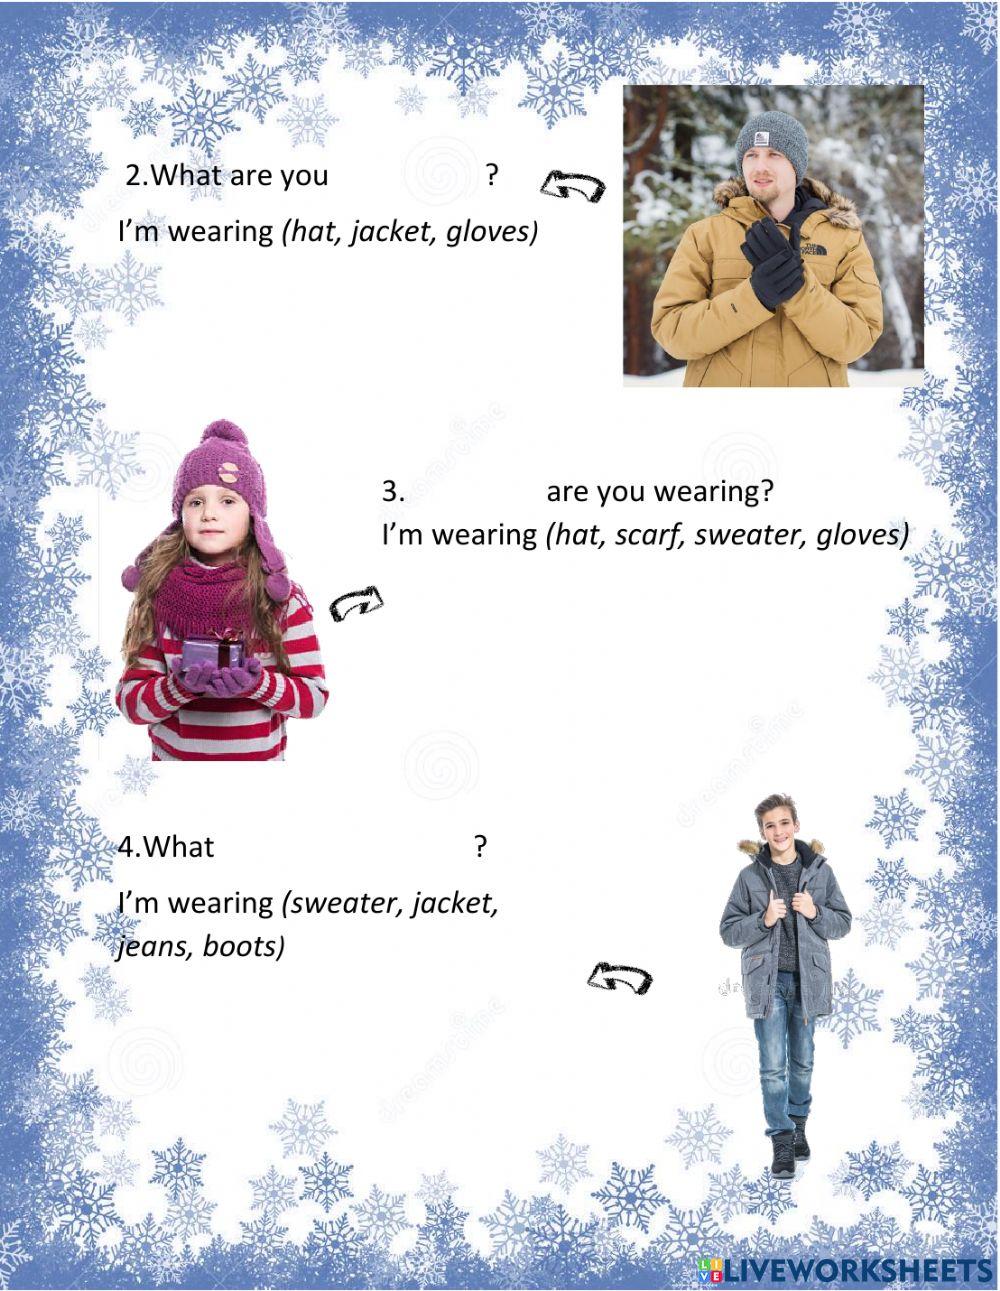 Winter clothes